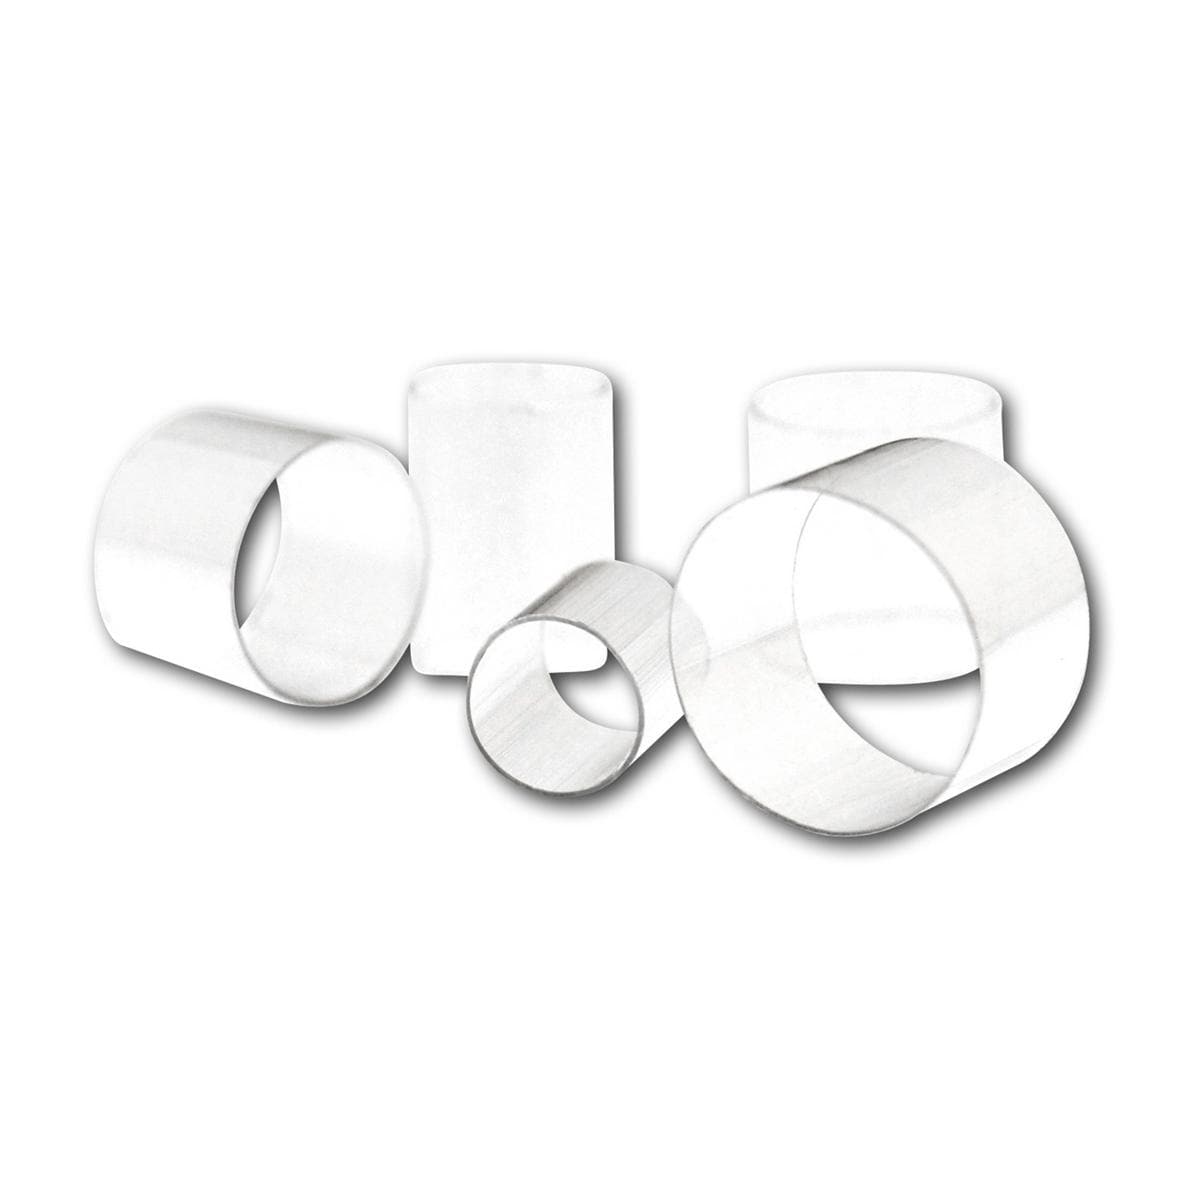 Transparent Ringe - Nachfüllpackung - Nr. 15, Packung 12 Stück